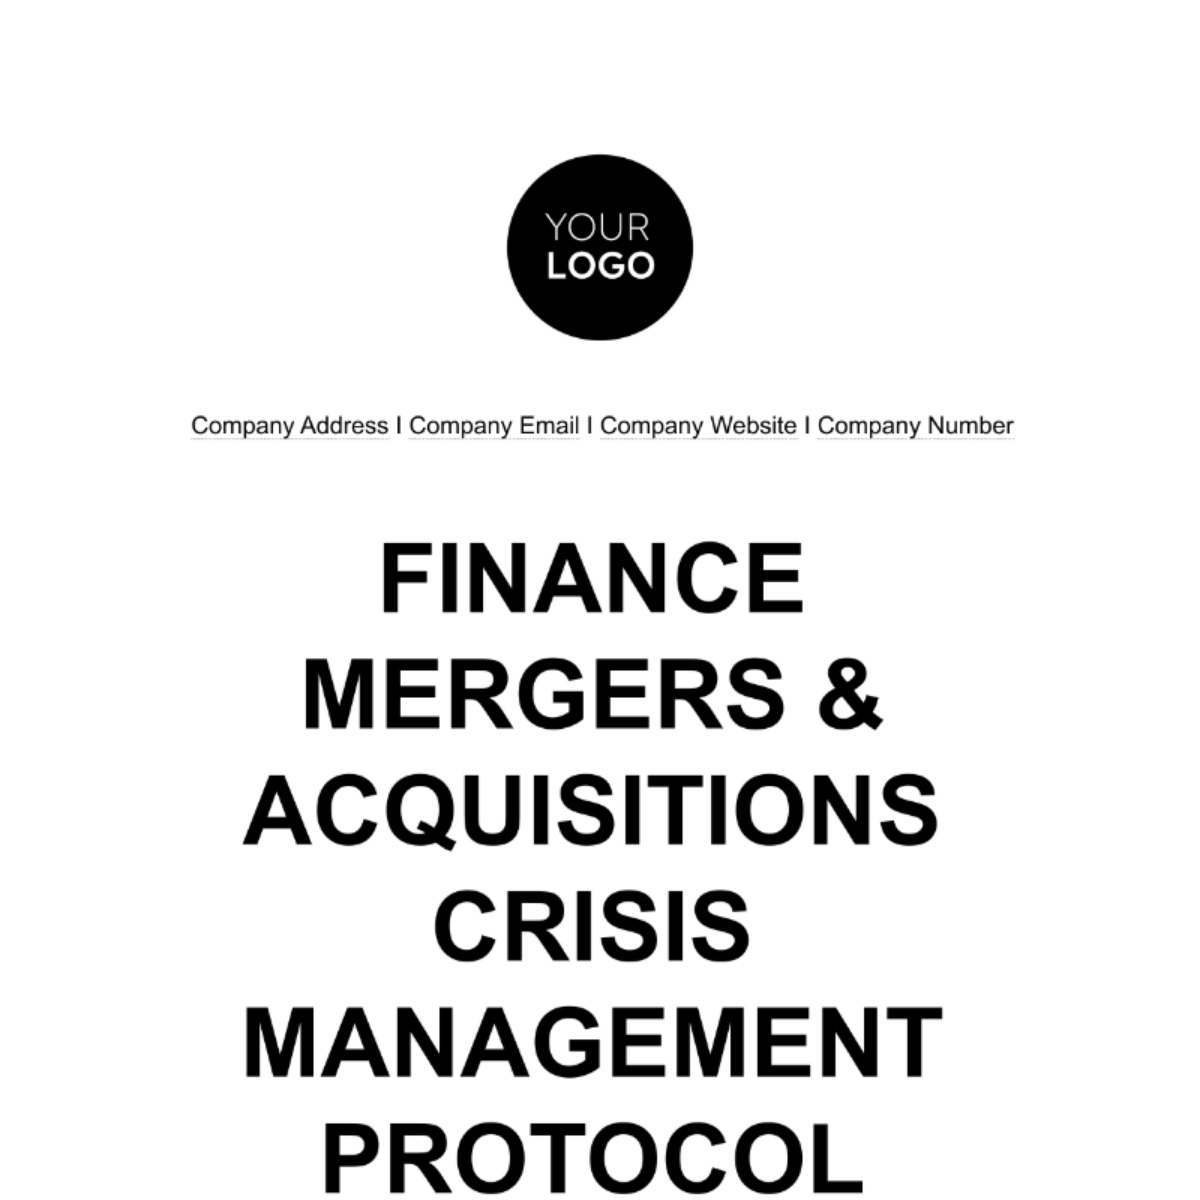 Finance Mergers & Acquisitions Crisis Management Protocol Template